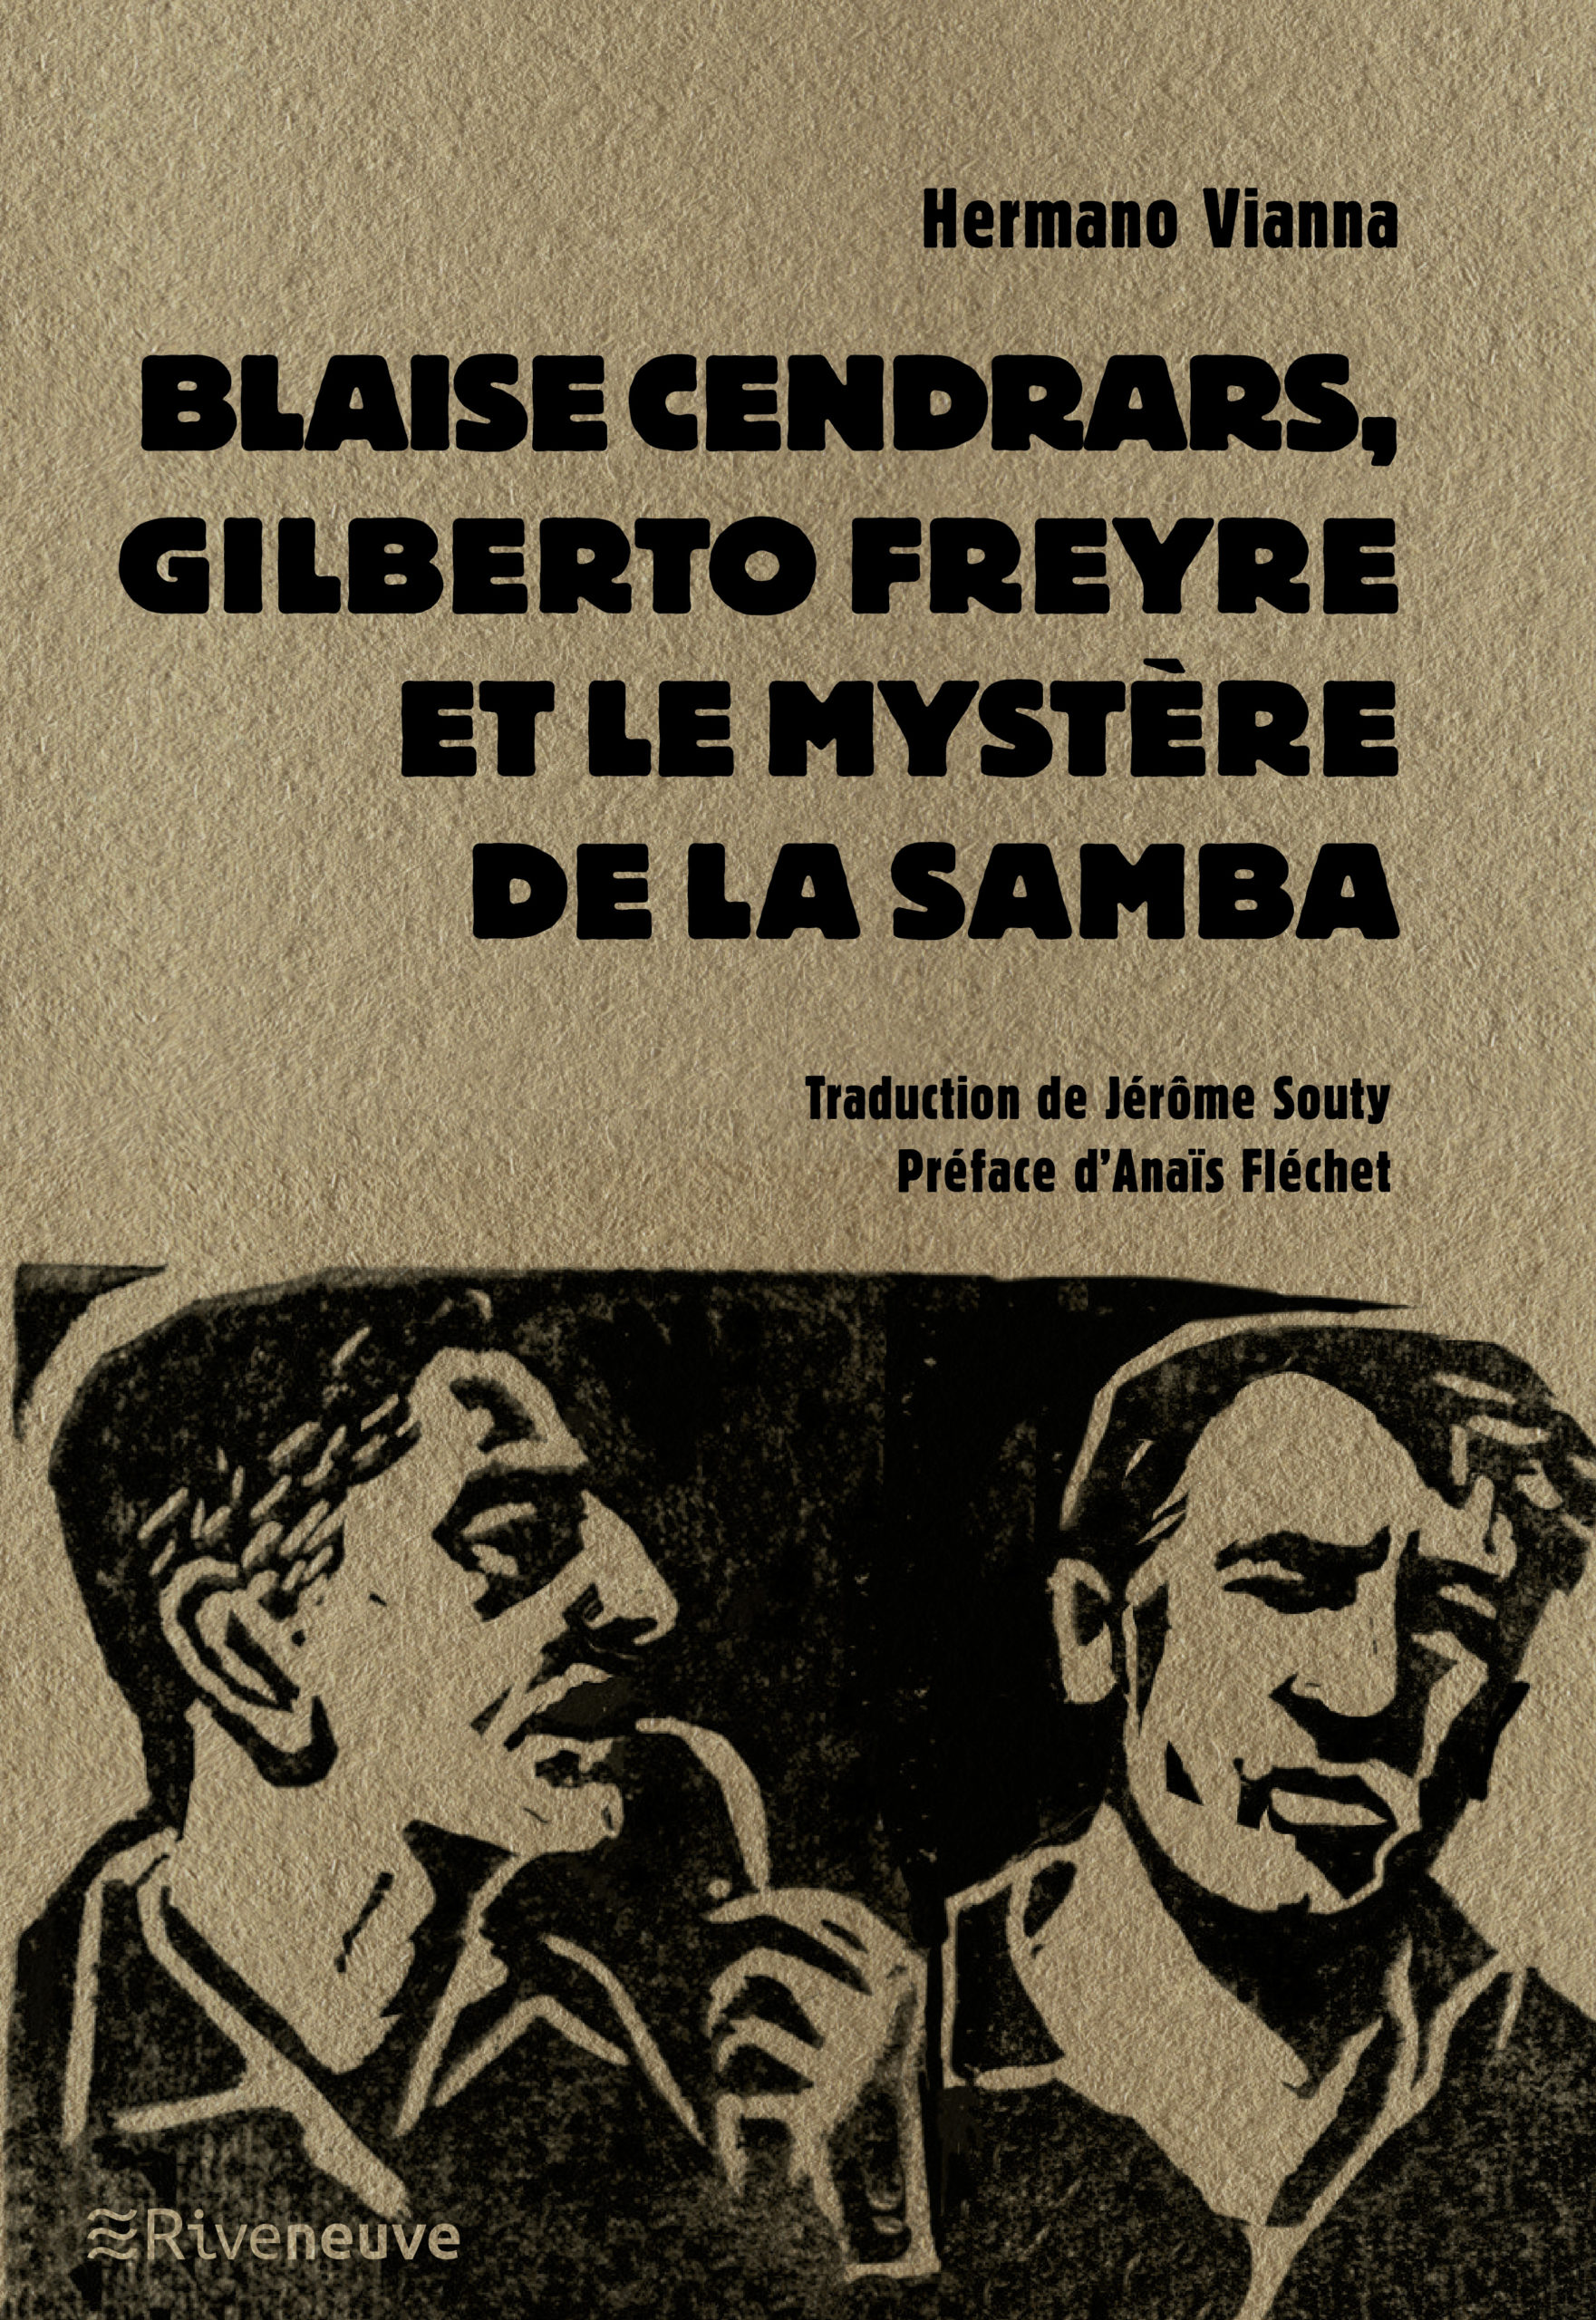 Blaise Cendrars, Gilberto Freyre et le mystère de la samba